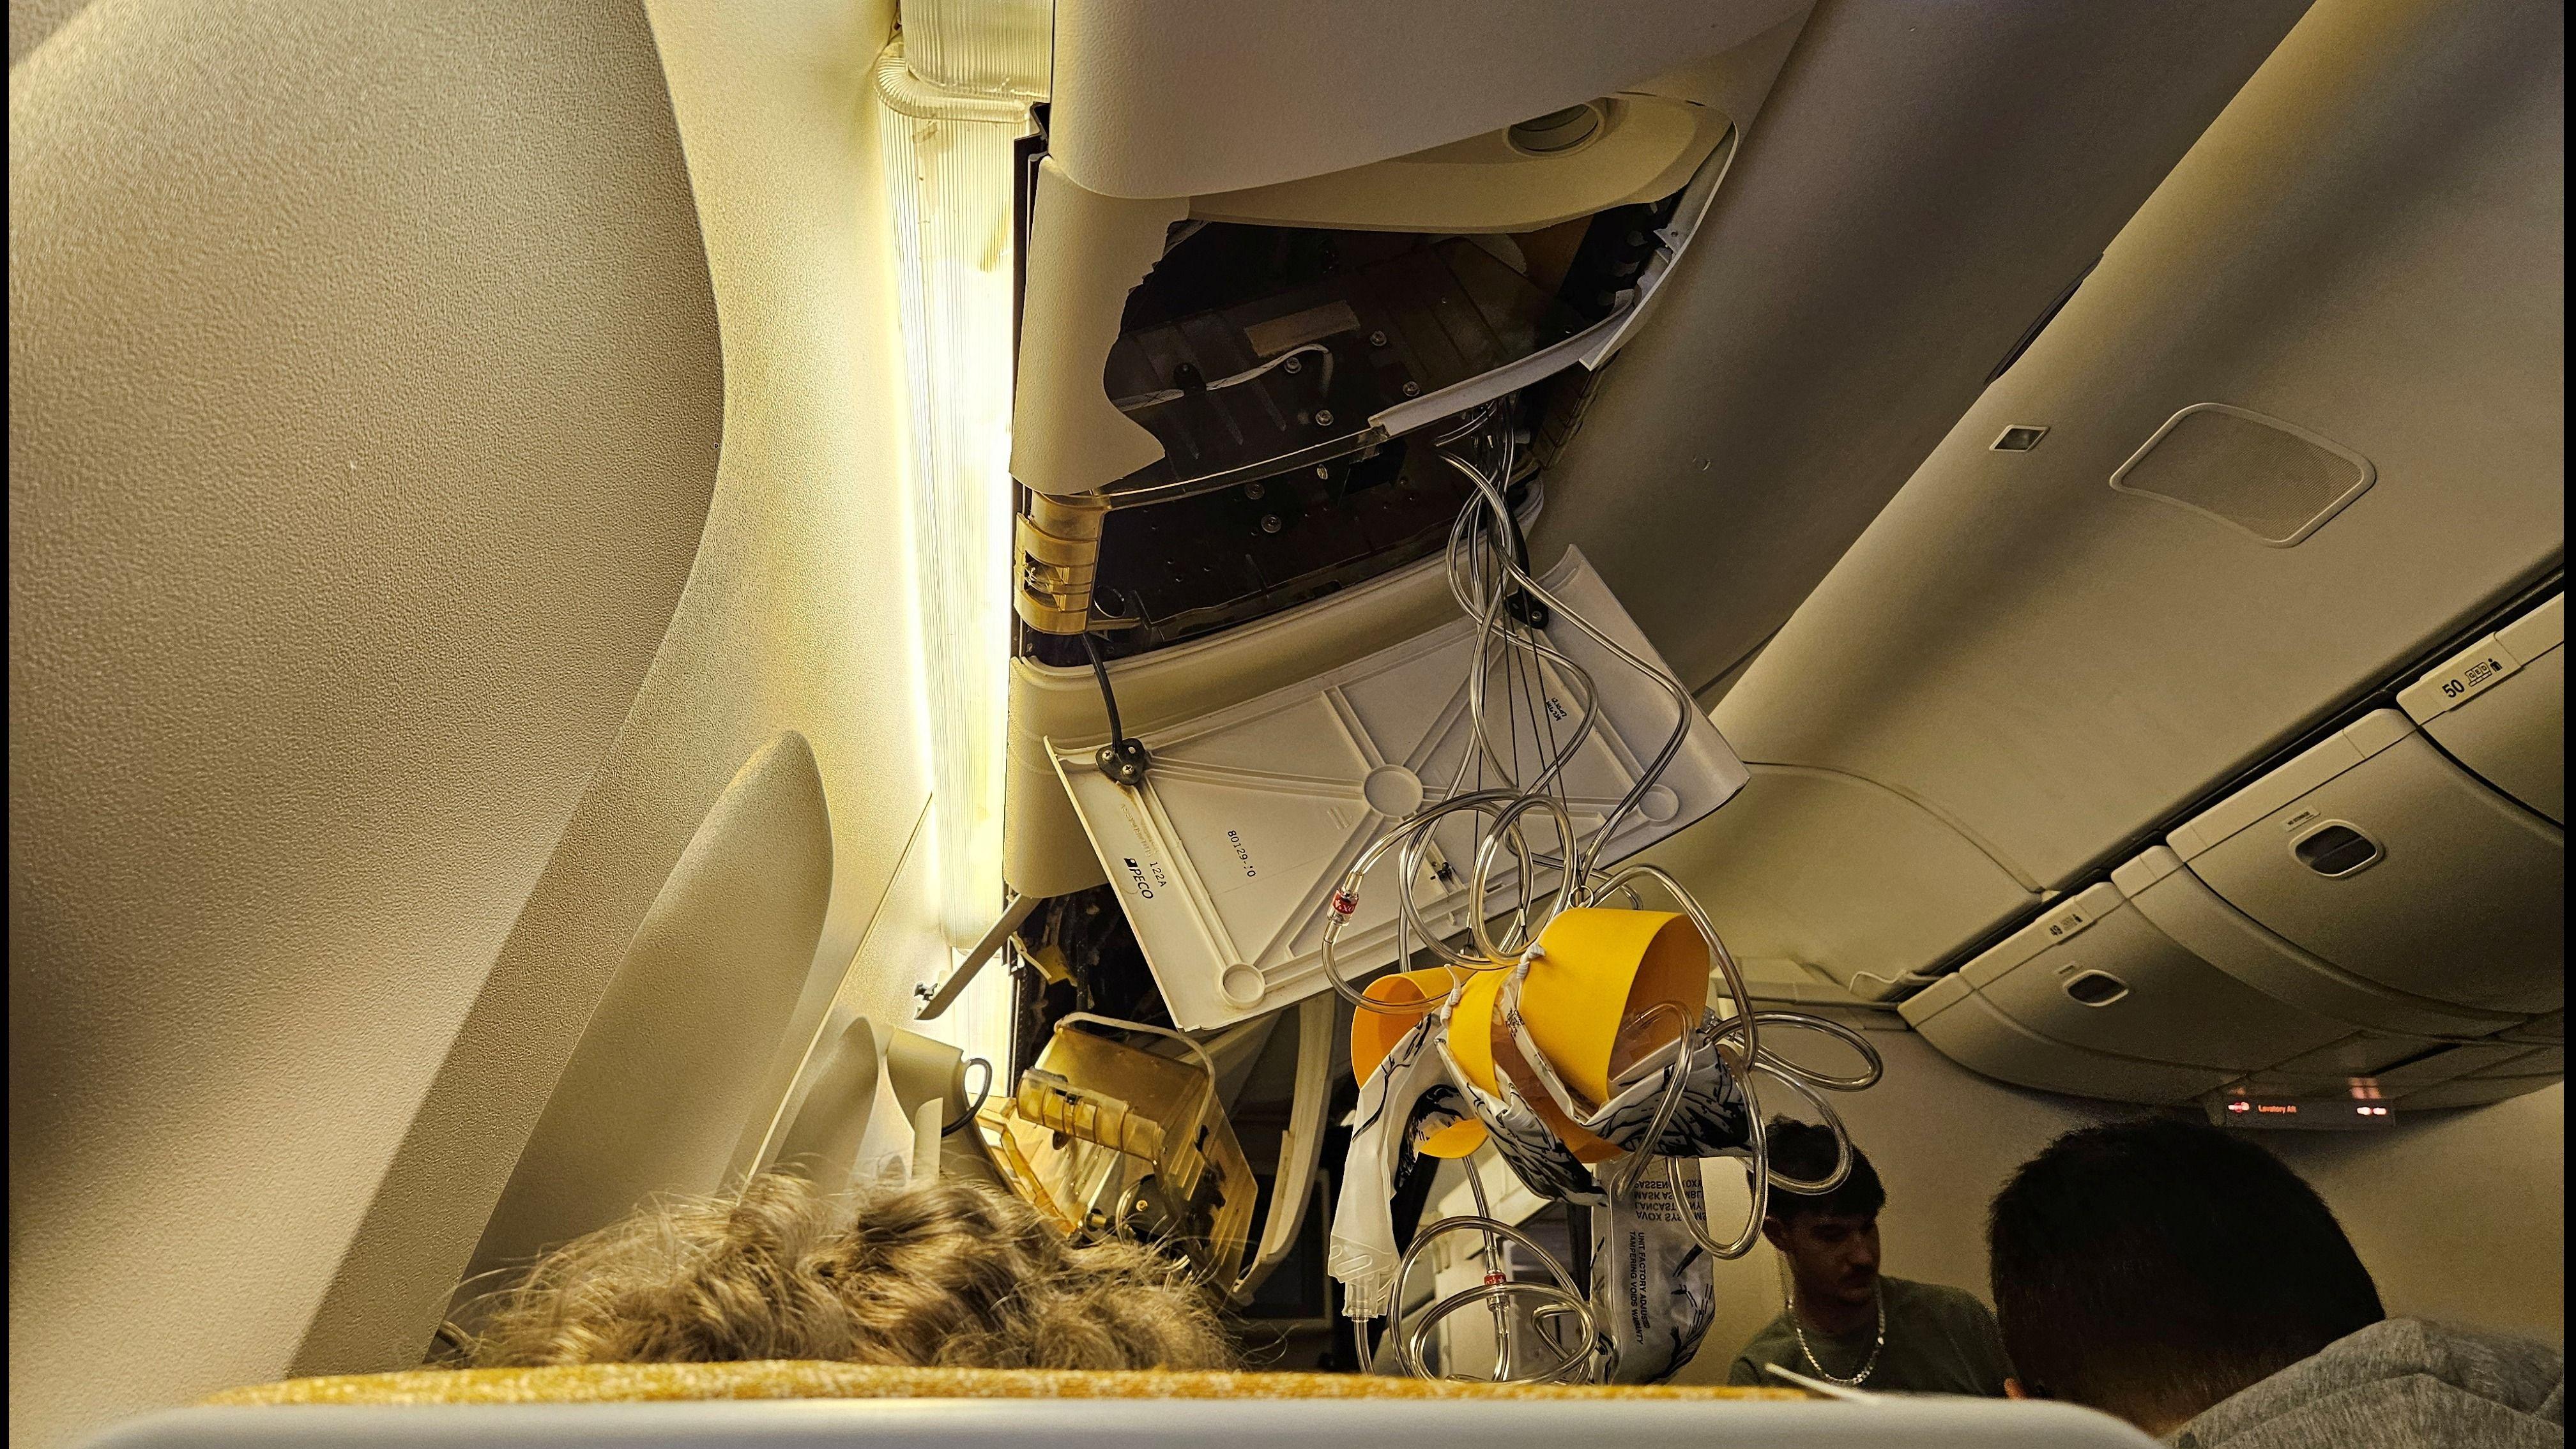 Screaming in agony: Passengers recall horror onboard flight